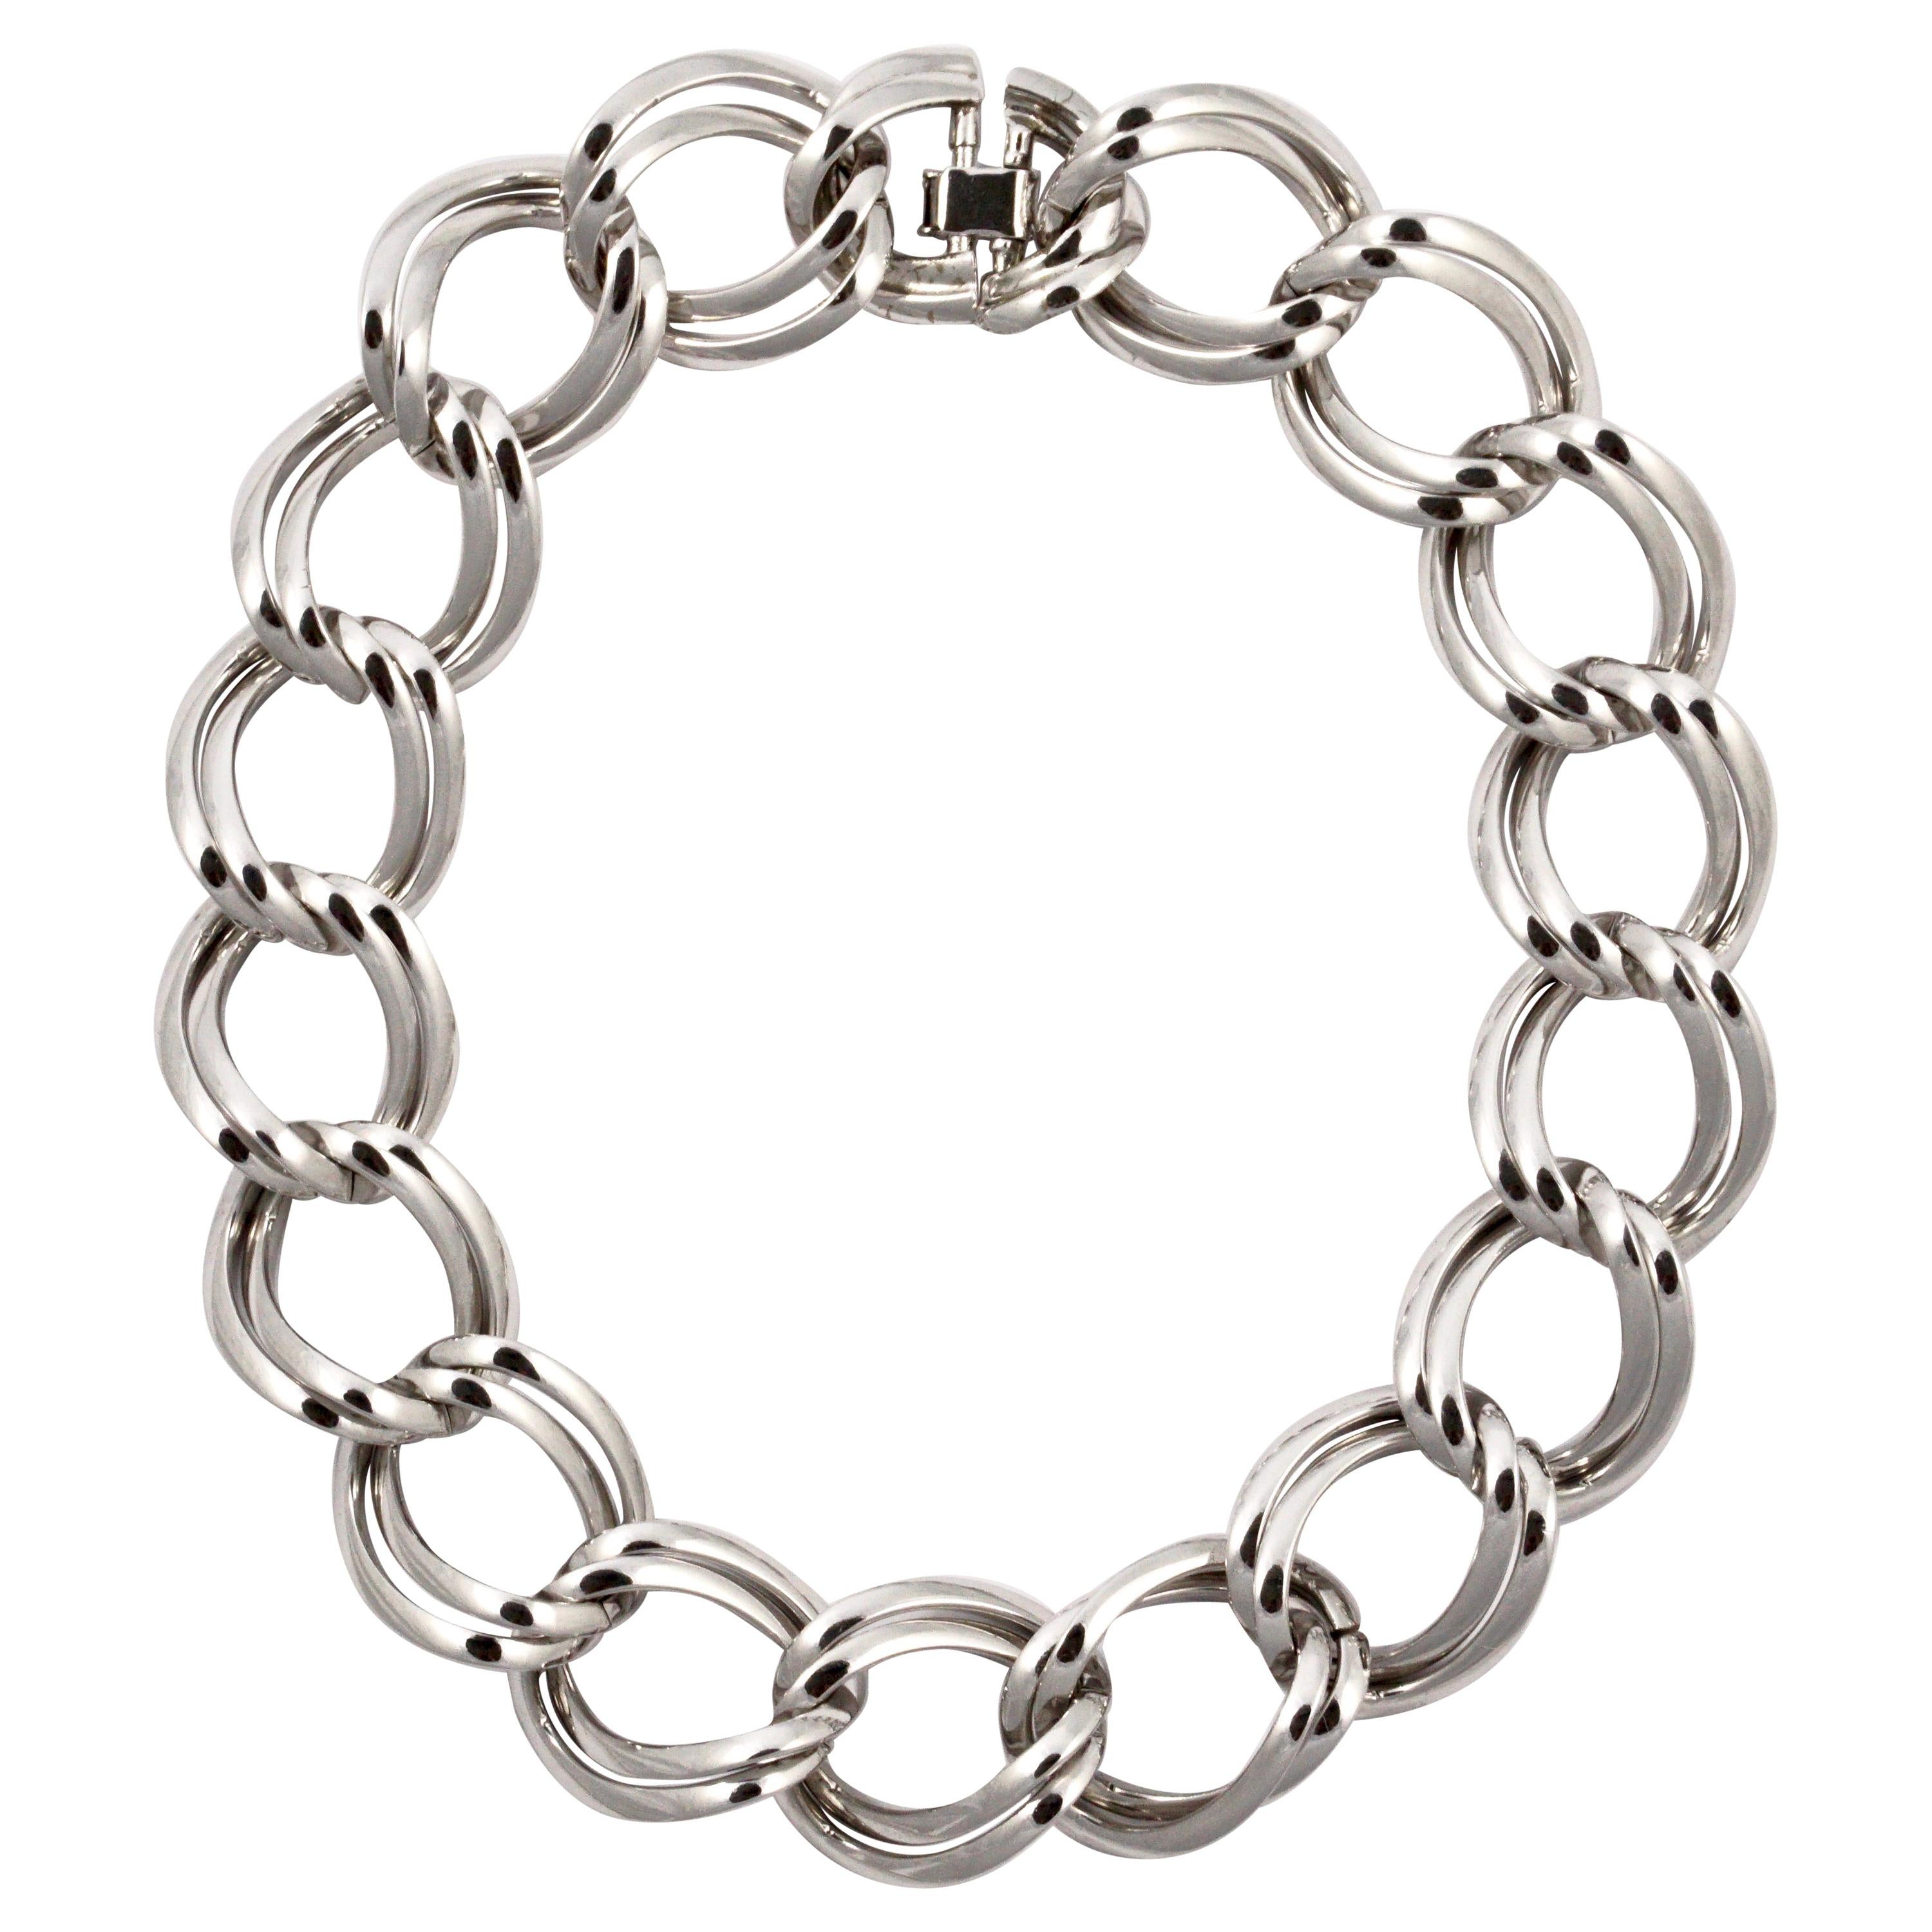 Nina Ricci Silver Plated Double Chain Link Collar Necklace circa 1980s ...